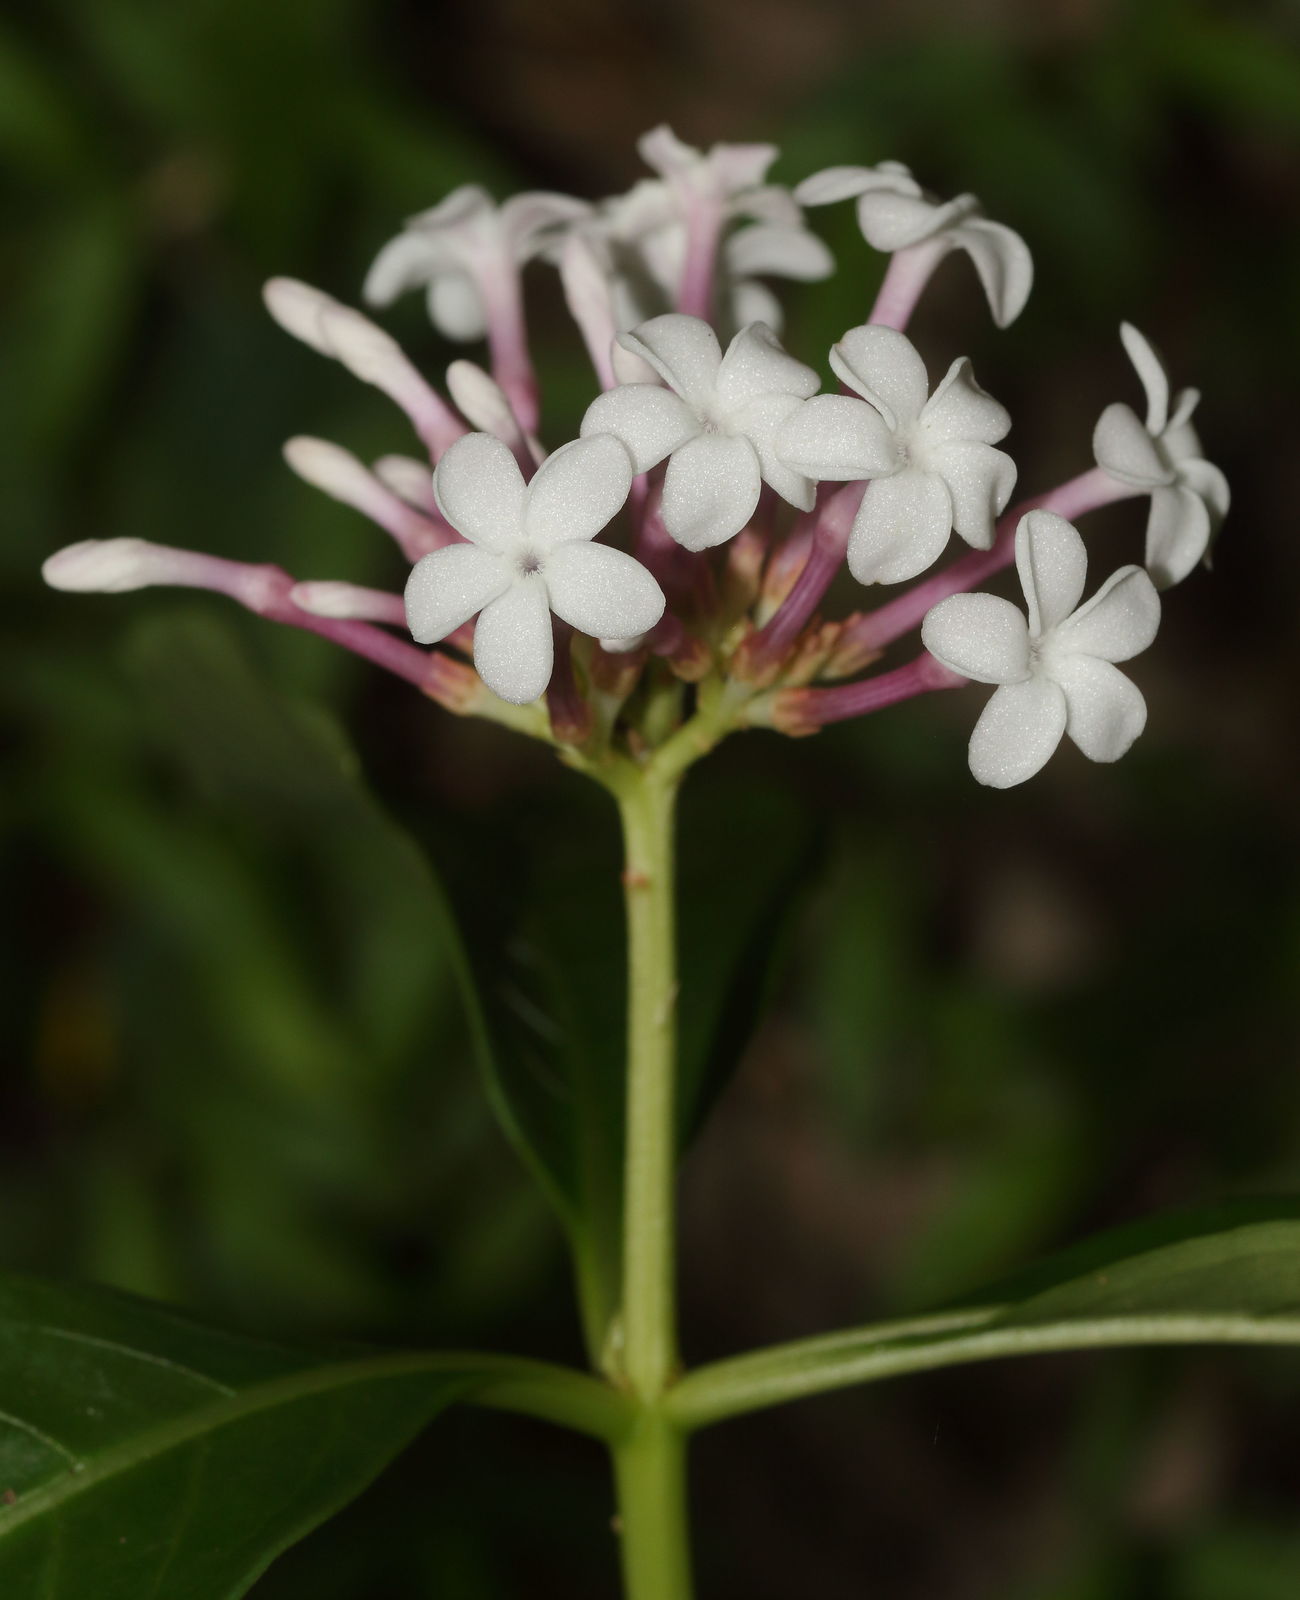 rauvolfia serpentina (l.) benth. ex kurz | plants of the world